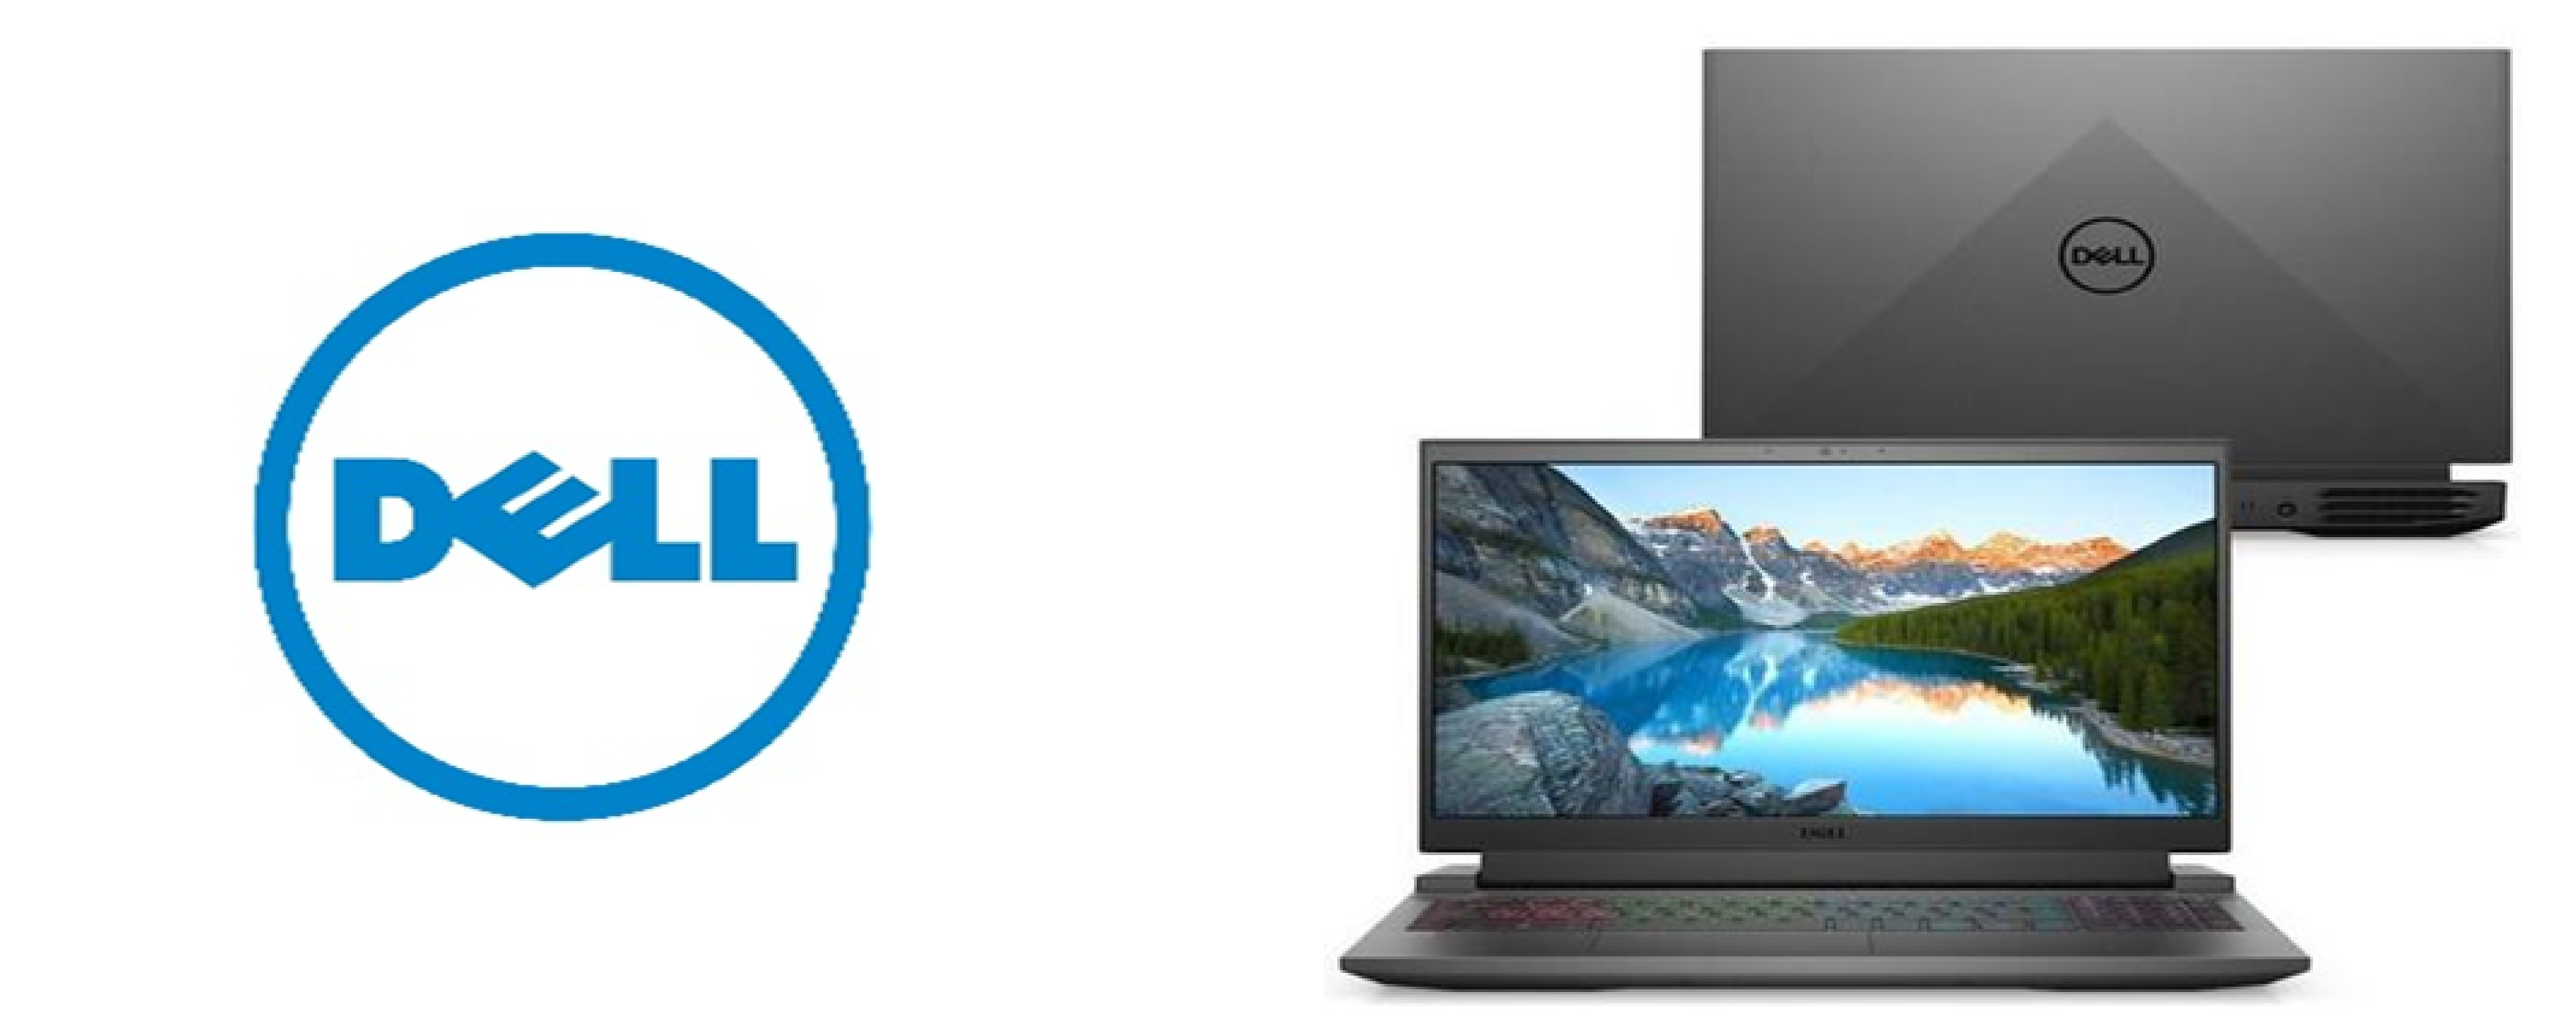 Dell Brand Laptop